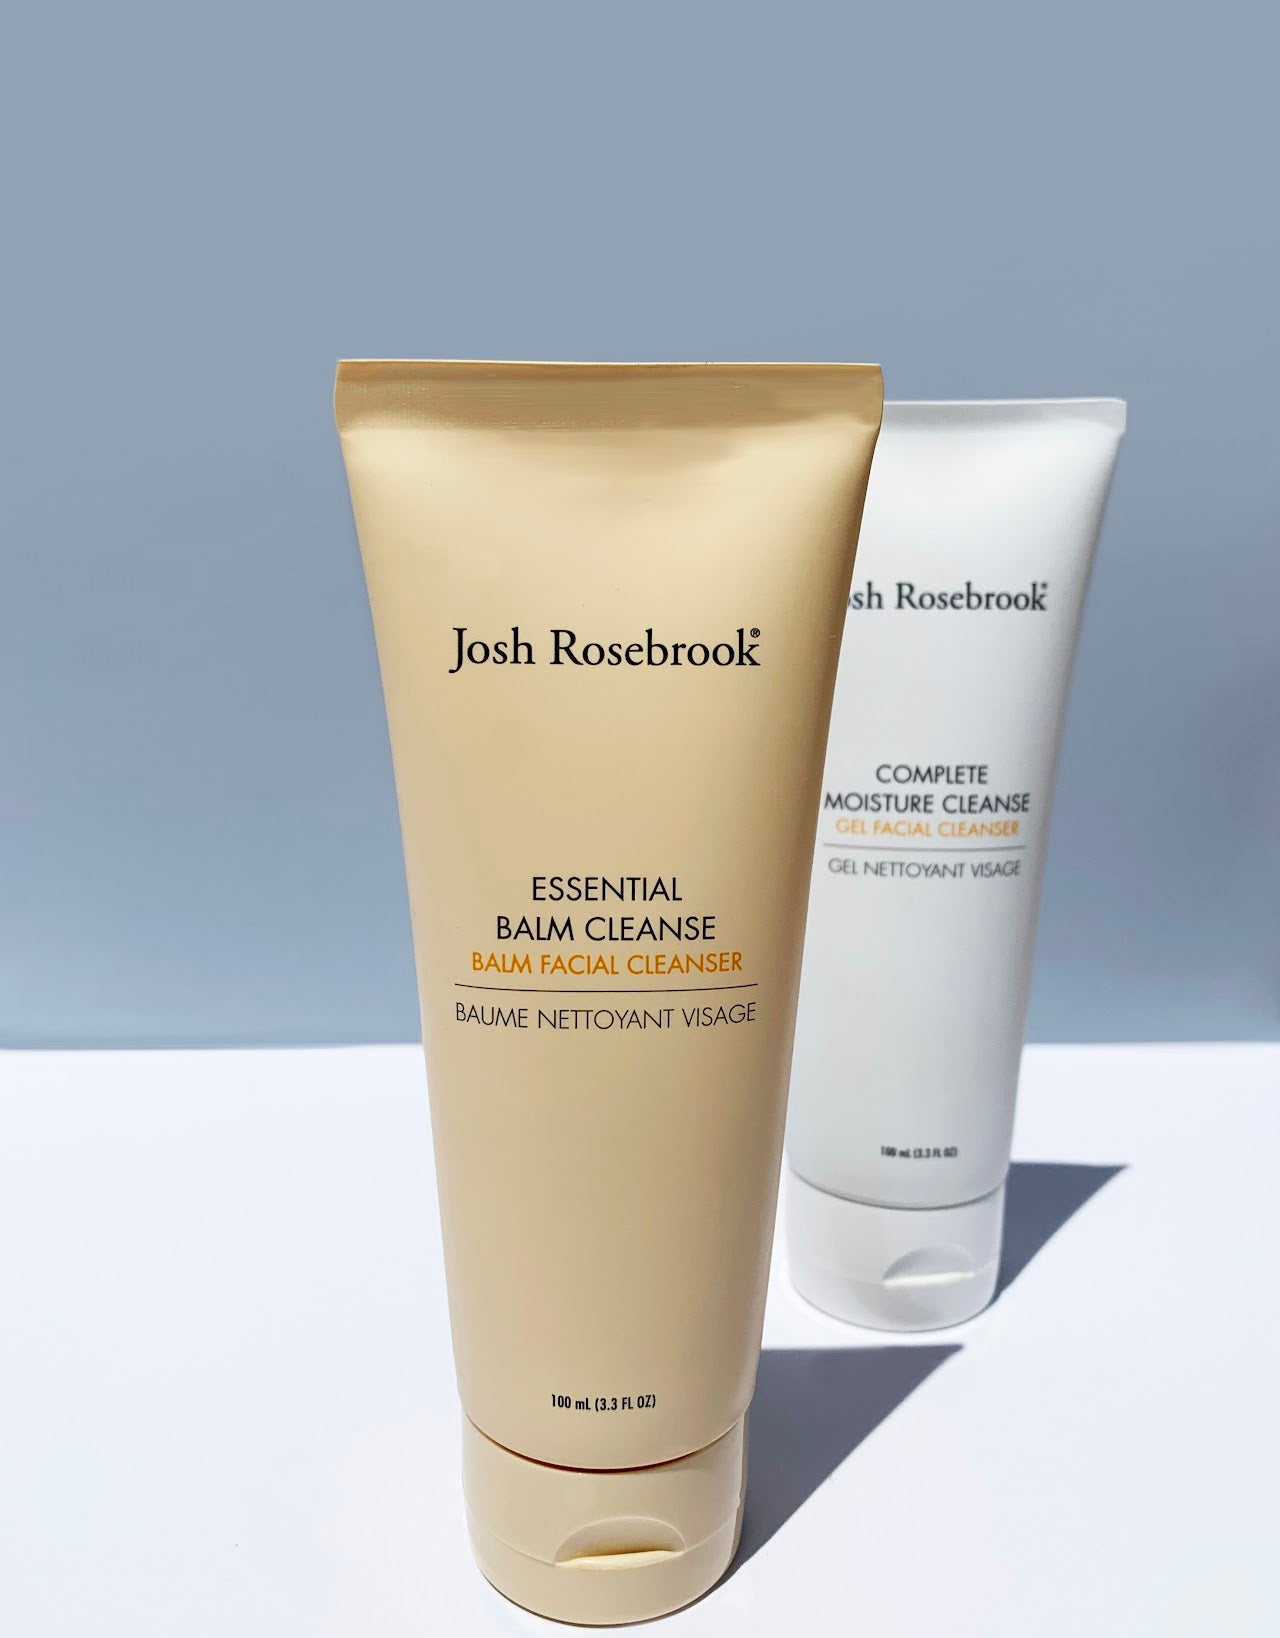 Josh Rosebrook Essential Balm Cleanse